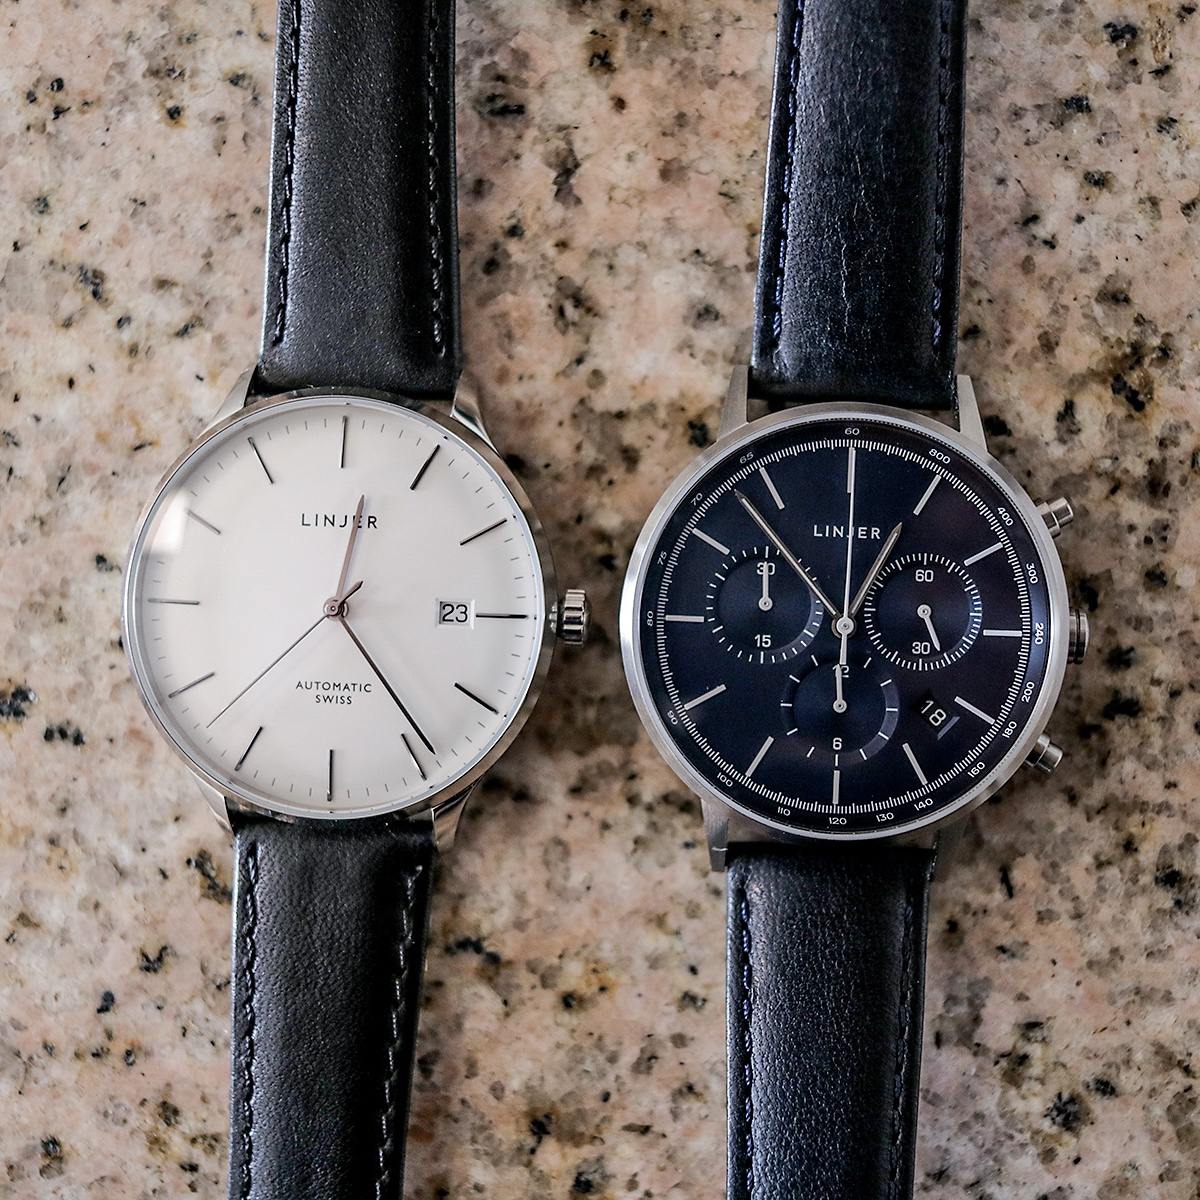 quartz analog watch movement